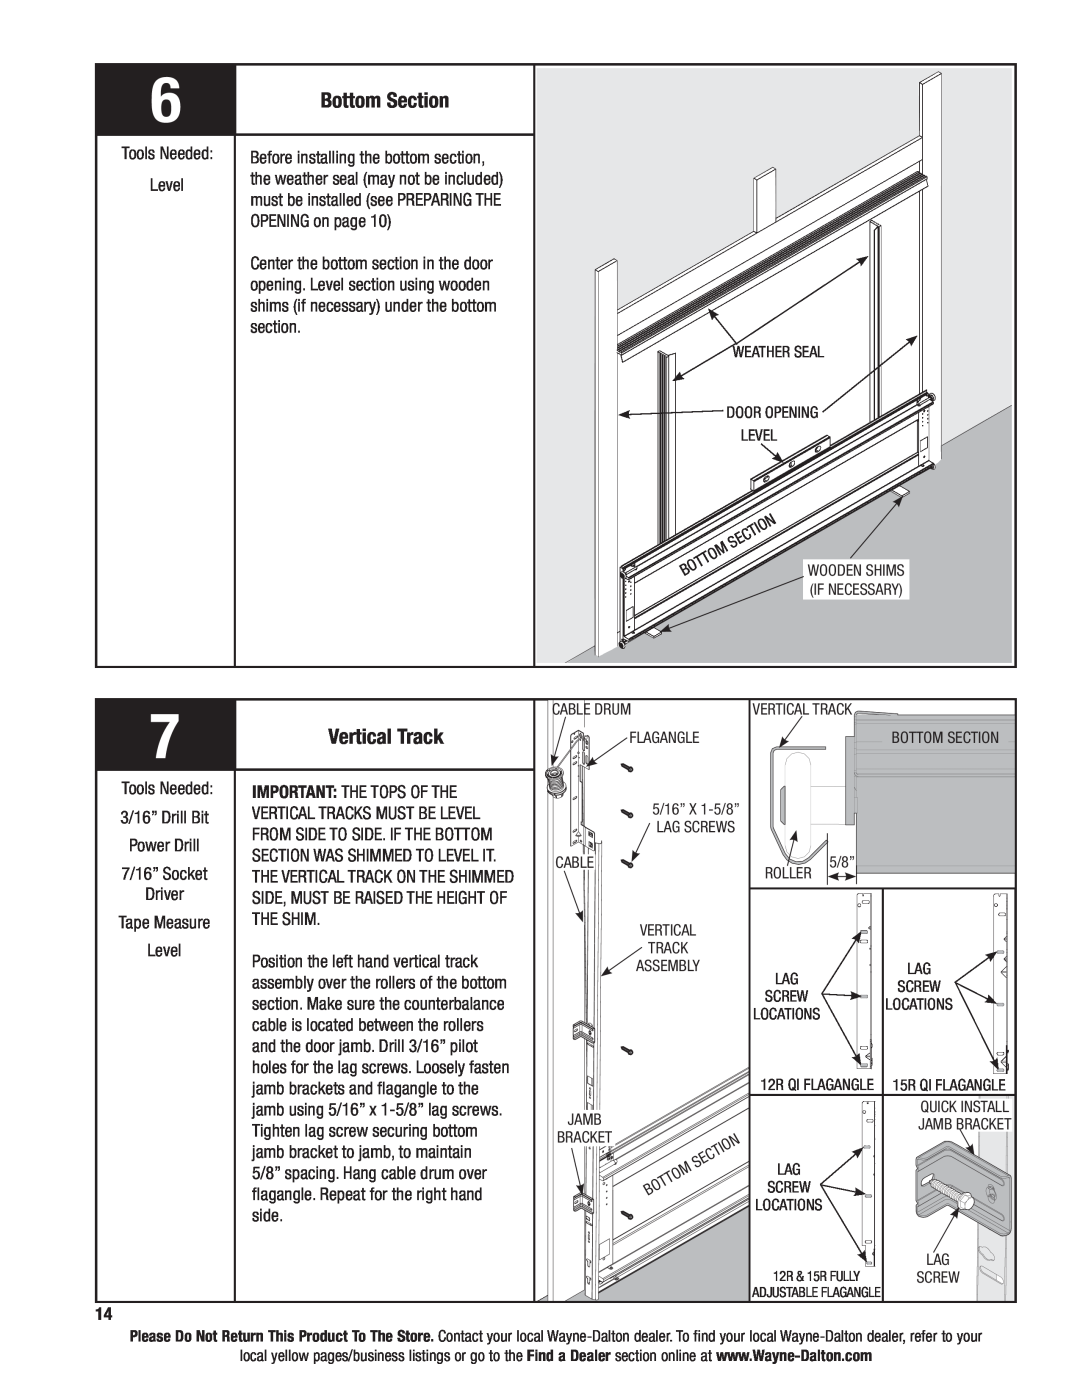 Wayne-Dalton 9600 installation instructions Bottom Section, Vertical Track 